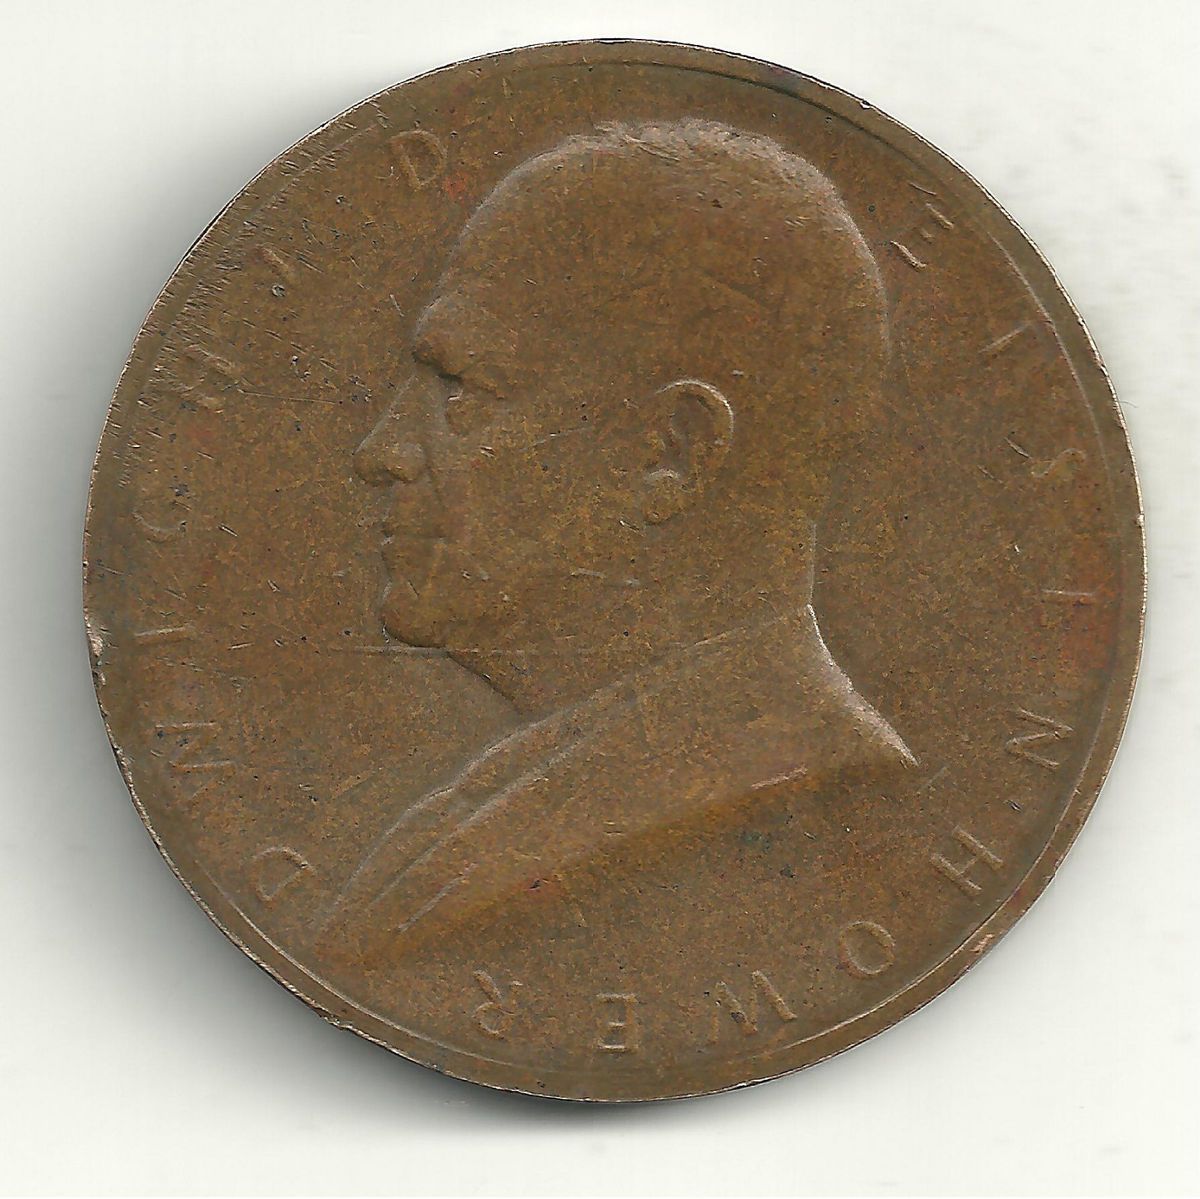 Nice Detailing Dwight D Eisenhower US Mint Inaugurated President Jan